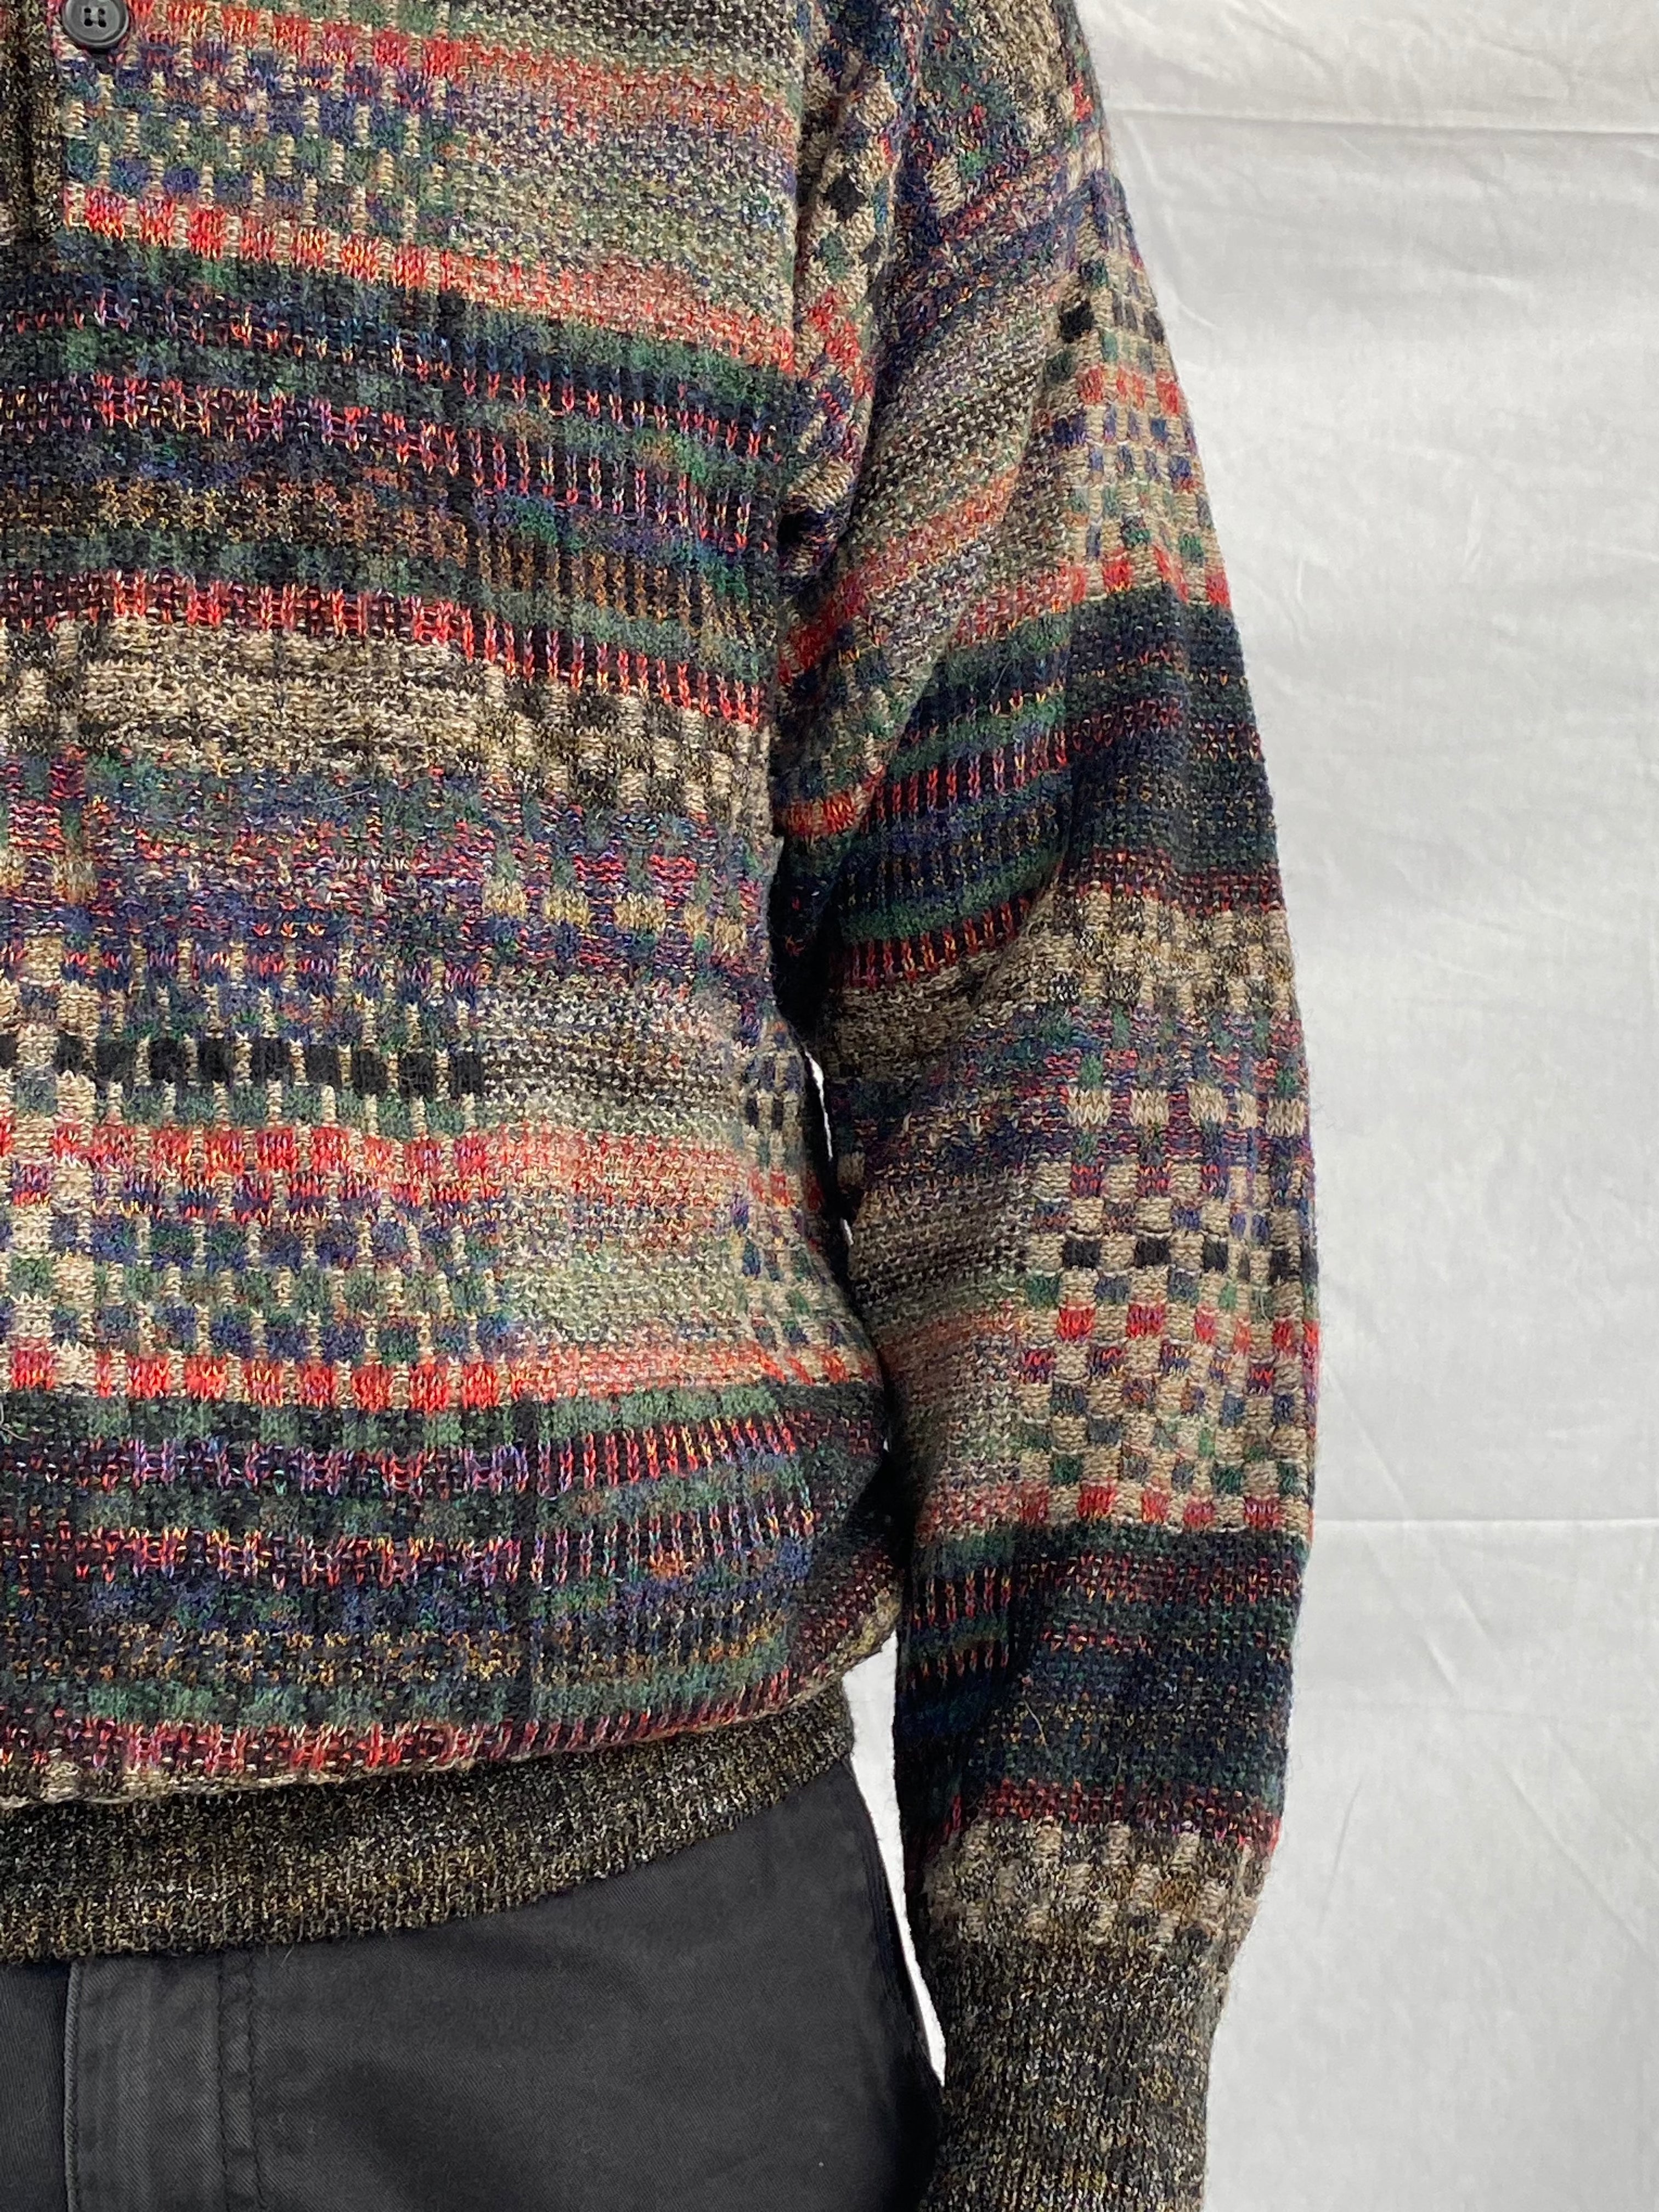 Vintage PROMAN Knitted Sweater - Balagan Vintage Sweater 00s, 90s, knitted, knitted sweater, men, outerwear, printed sweater, streetwear, vintage, vintage sweater, winter